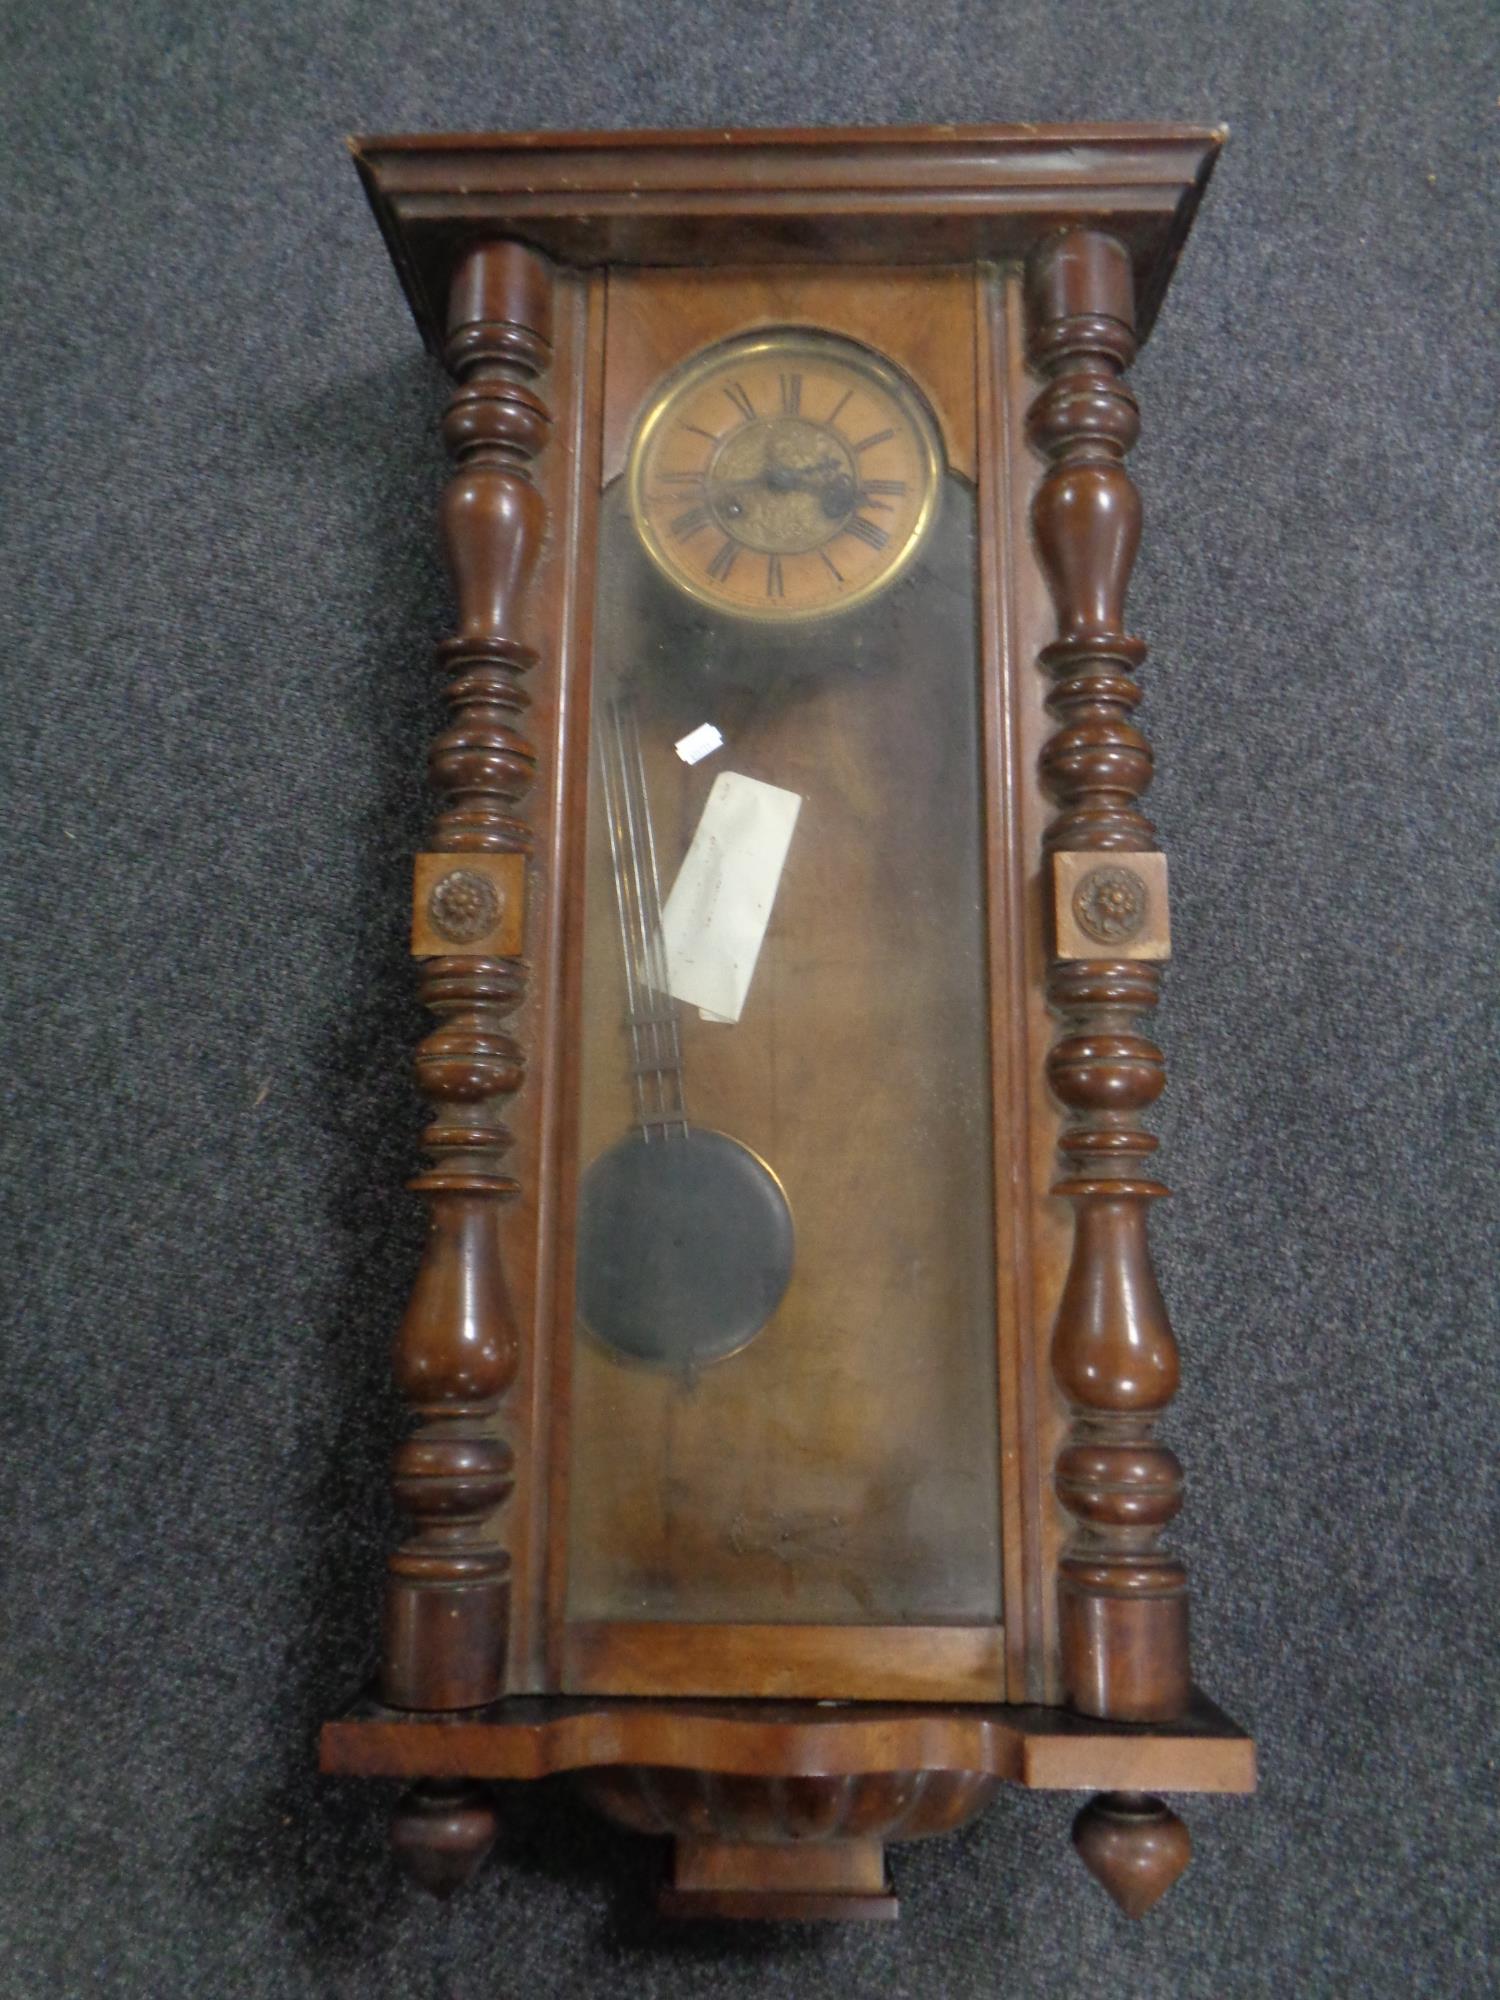 A 19th century Vienna wall clock.